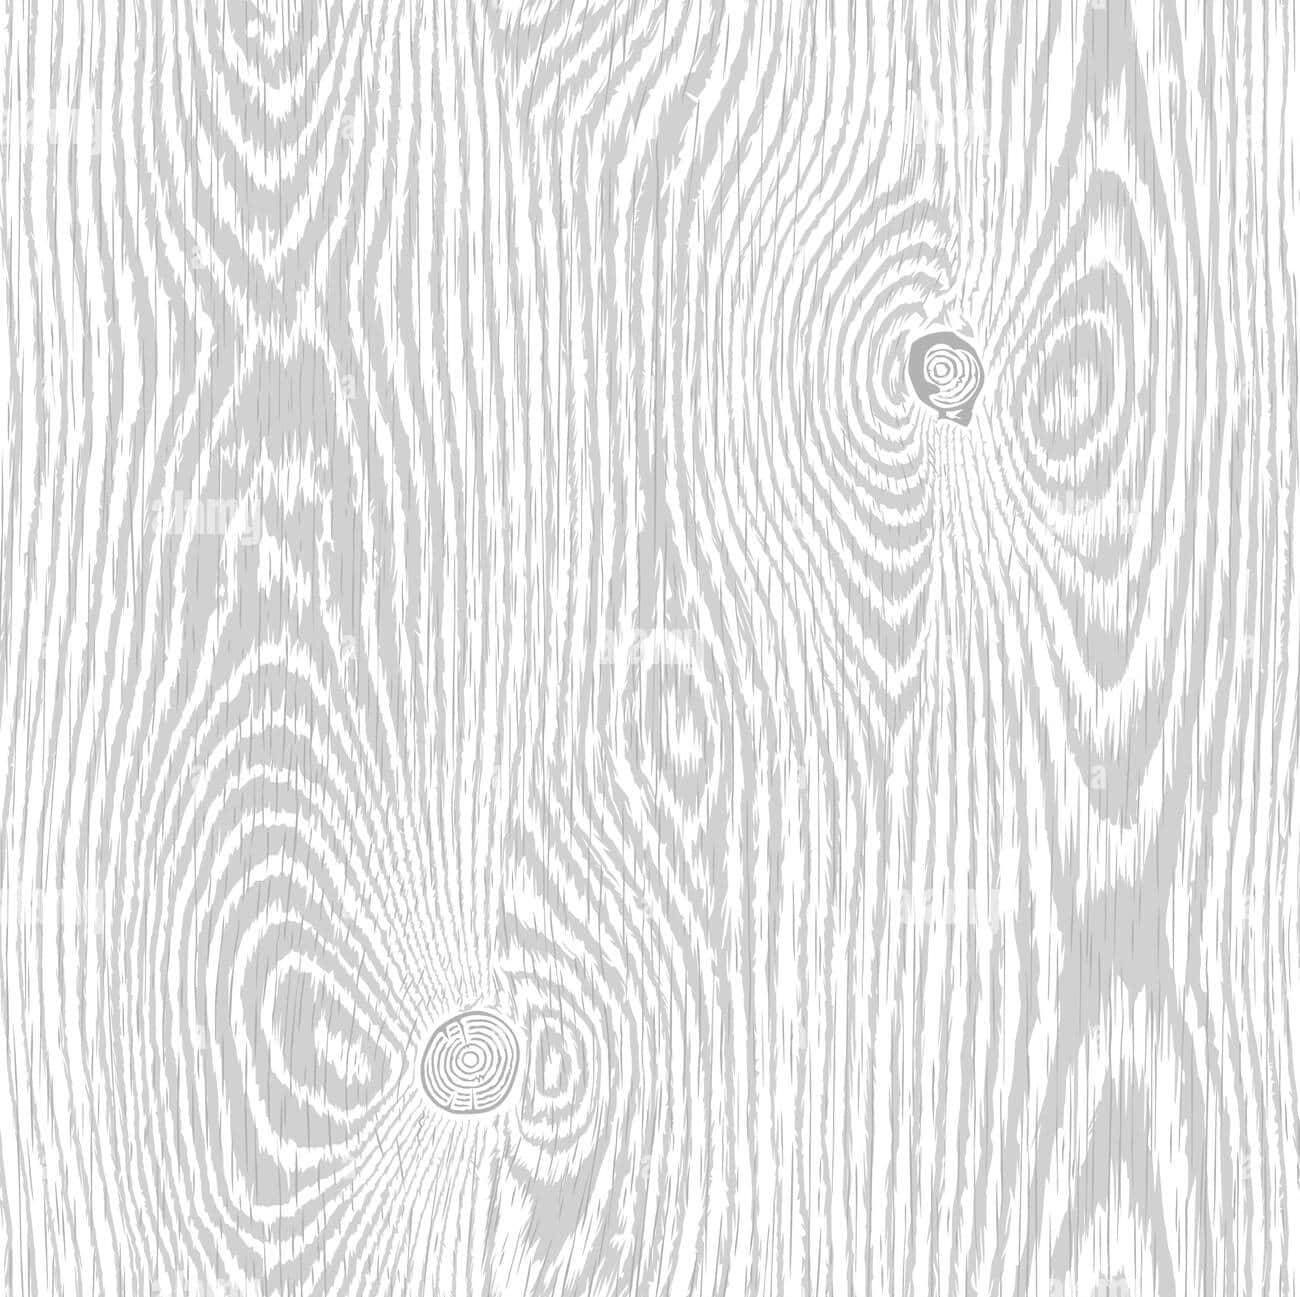 "Beautiful and Distinctive Grey Wood Pattern"